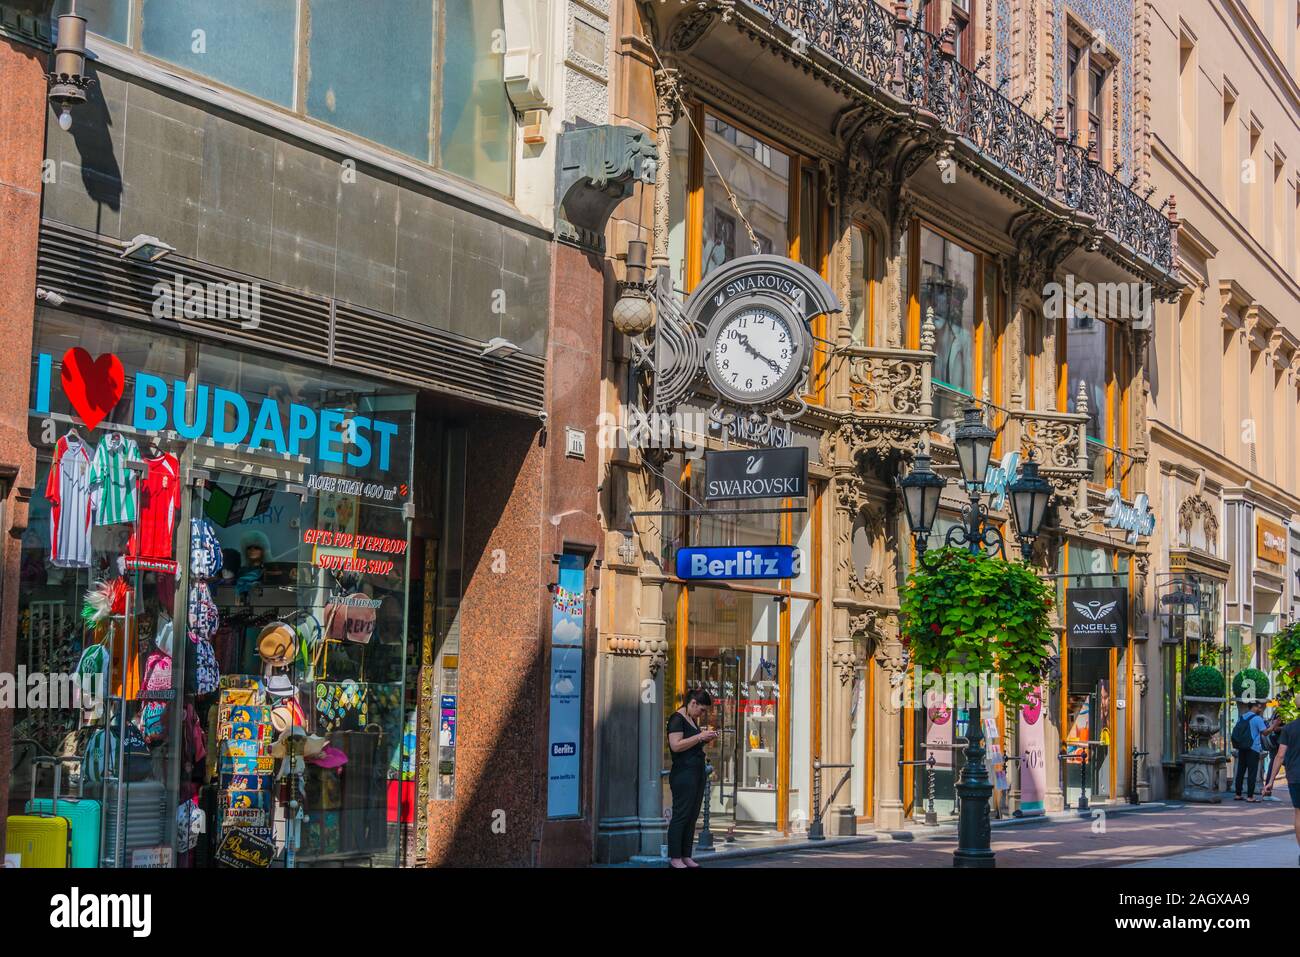 BUDAPEST, Ungarn - May 30, 2019: Berühmte Vaci Straße, der wichtigsten Einkaufsstraße in Budapest, Ungarn Stockfoto